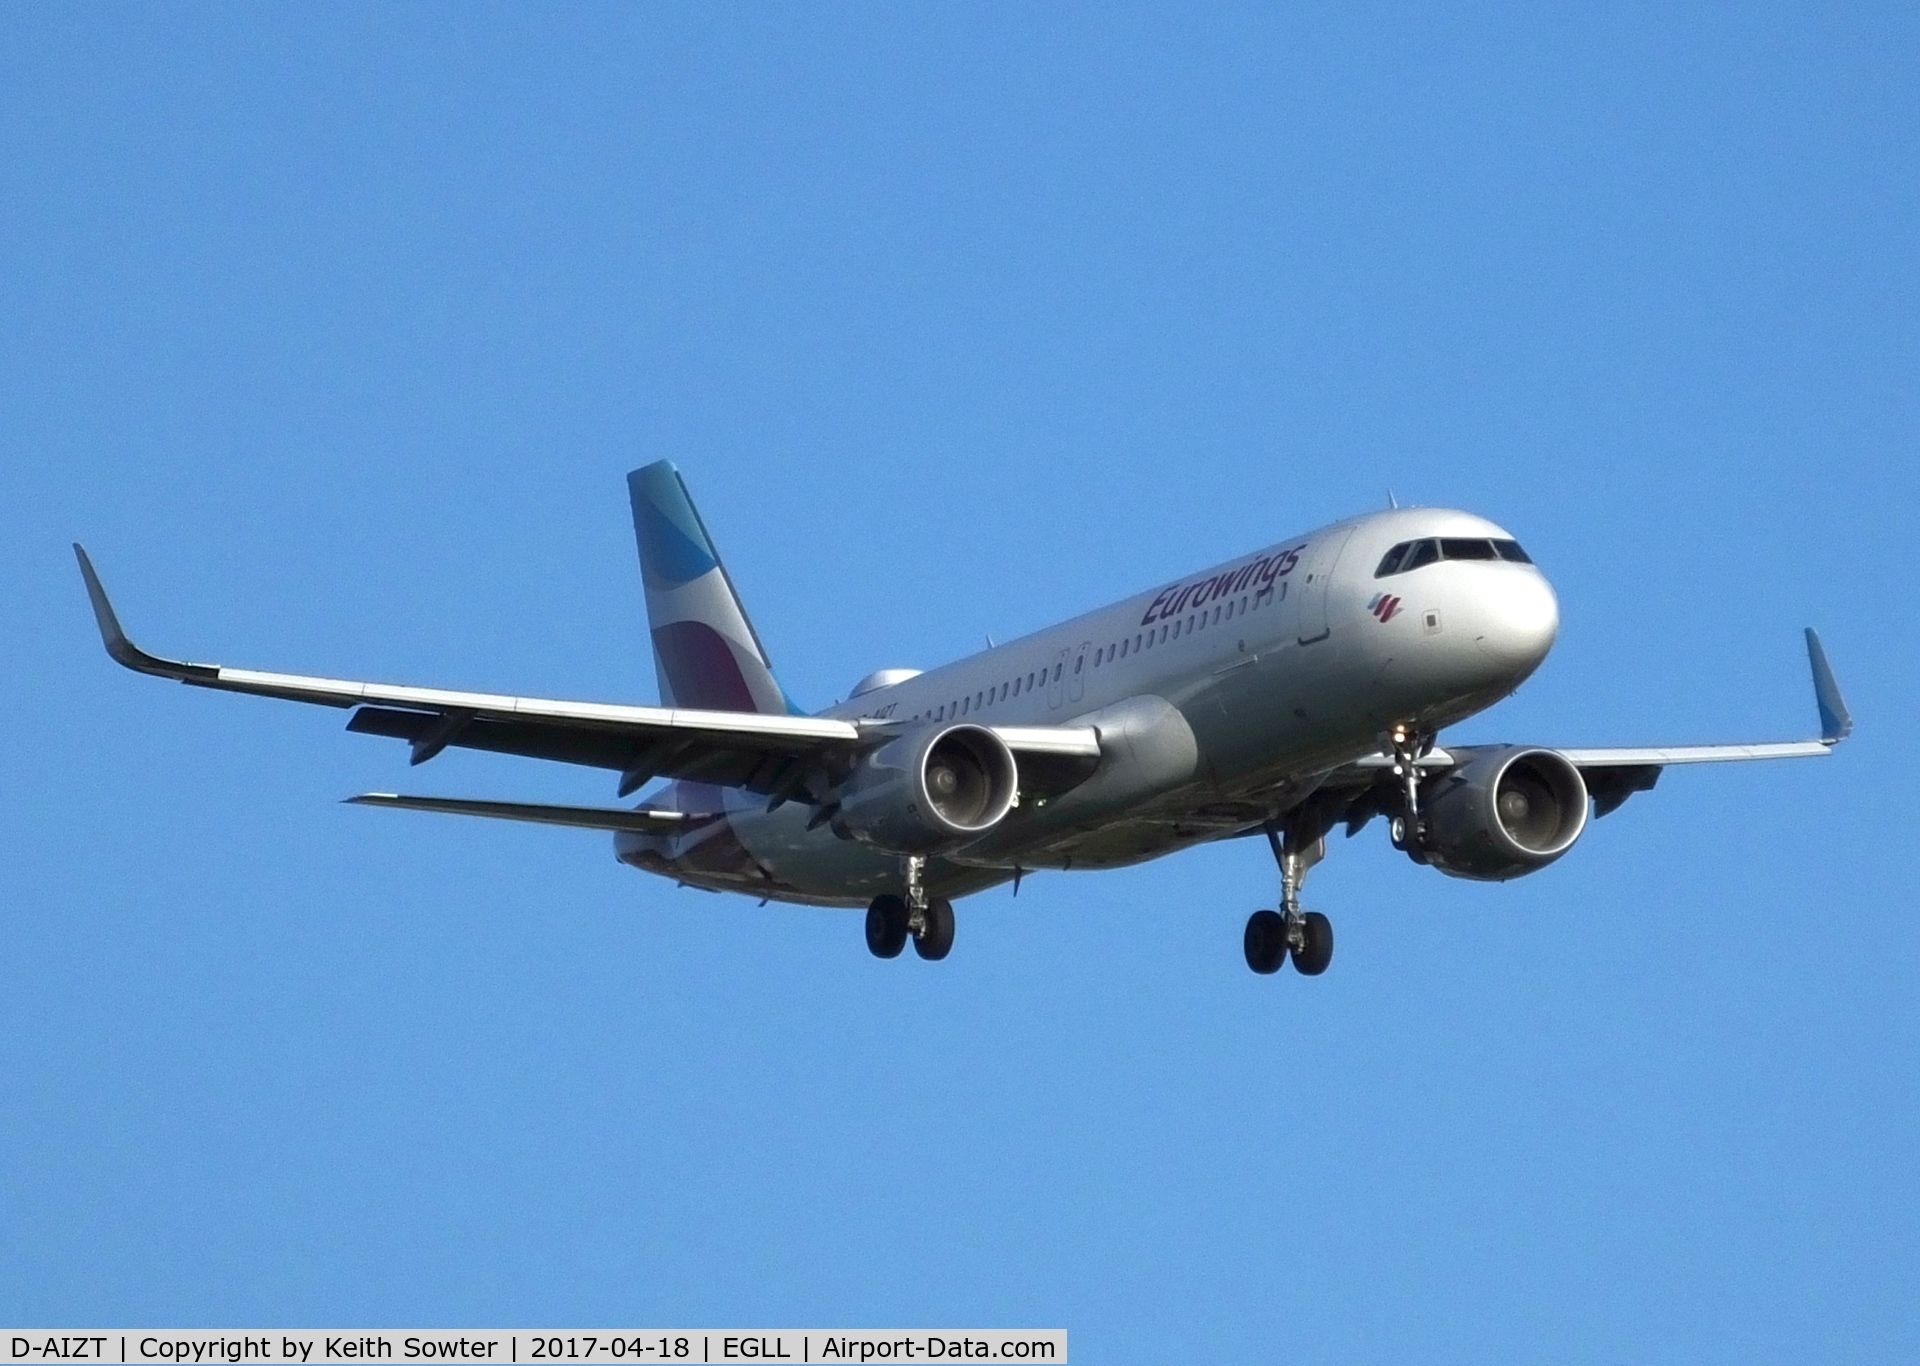 D-AIZT, 2013 Airbus A320-214 C/N 5601, Short finals to land Heathrow 09L